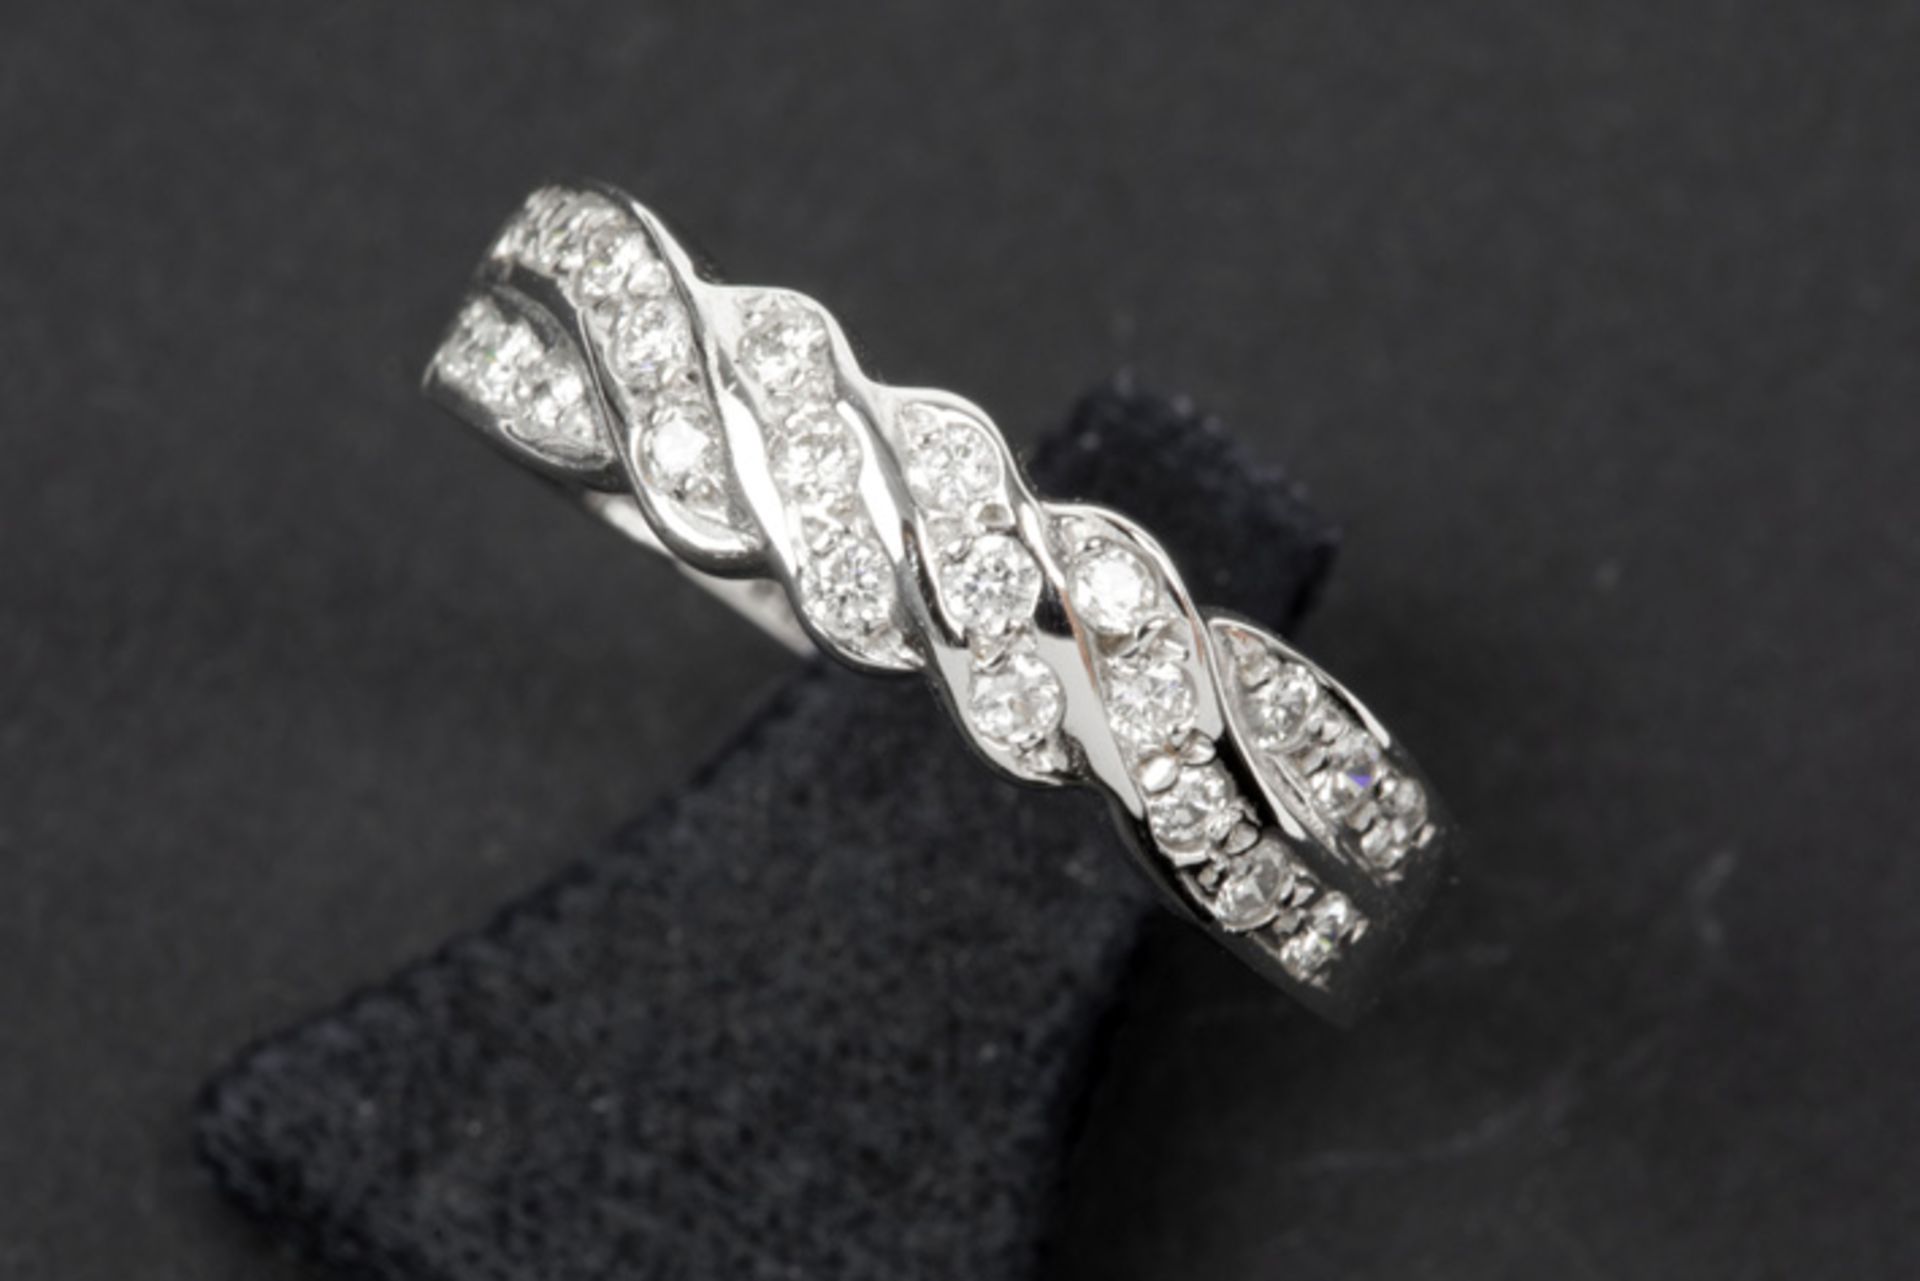 Ring in witgoud (18 karaat) bezet met briljant||ring in white gold (18 carat) with brilliant cut